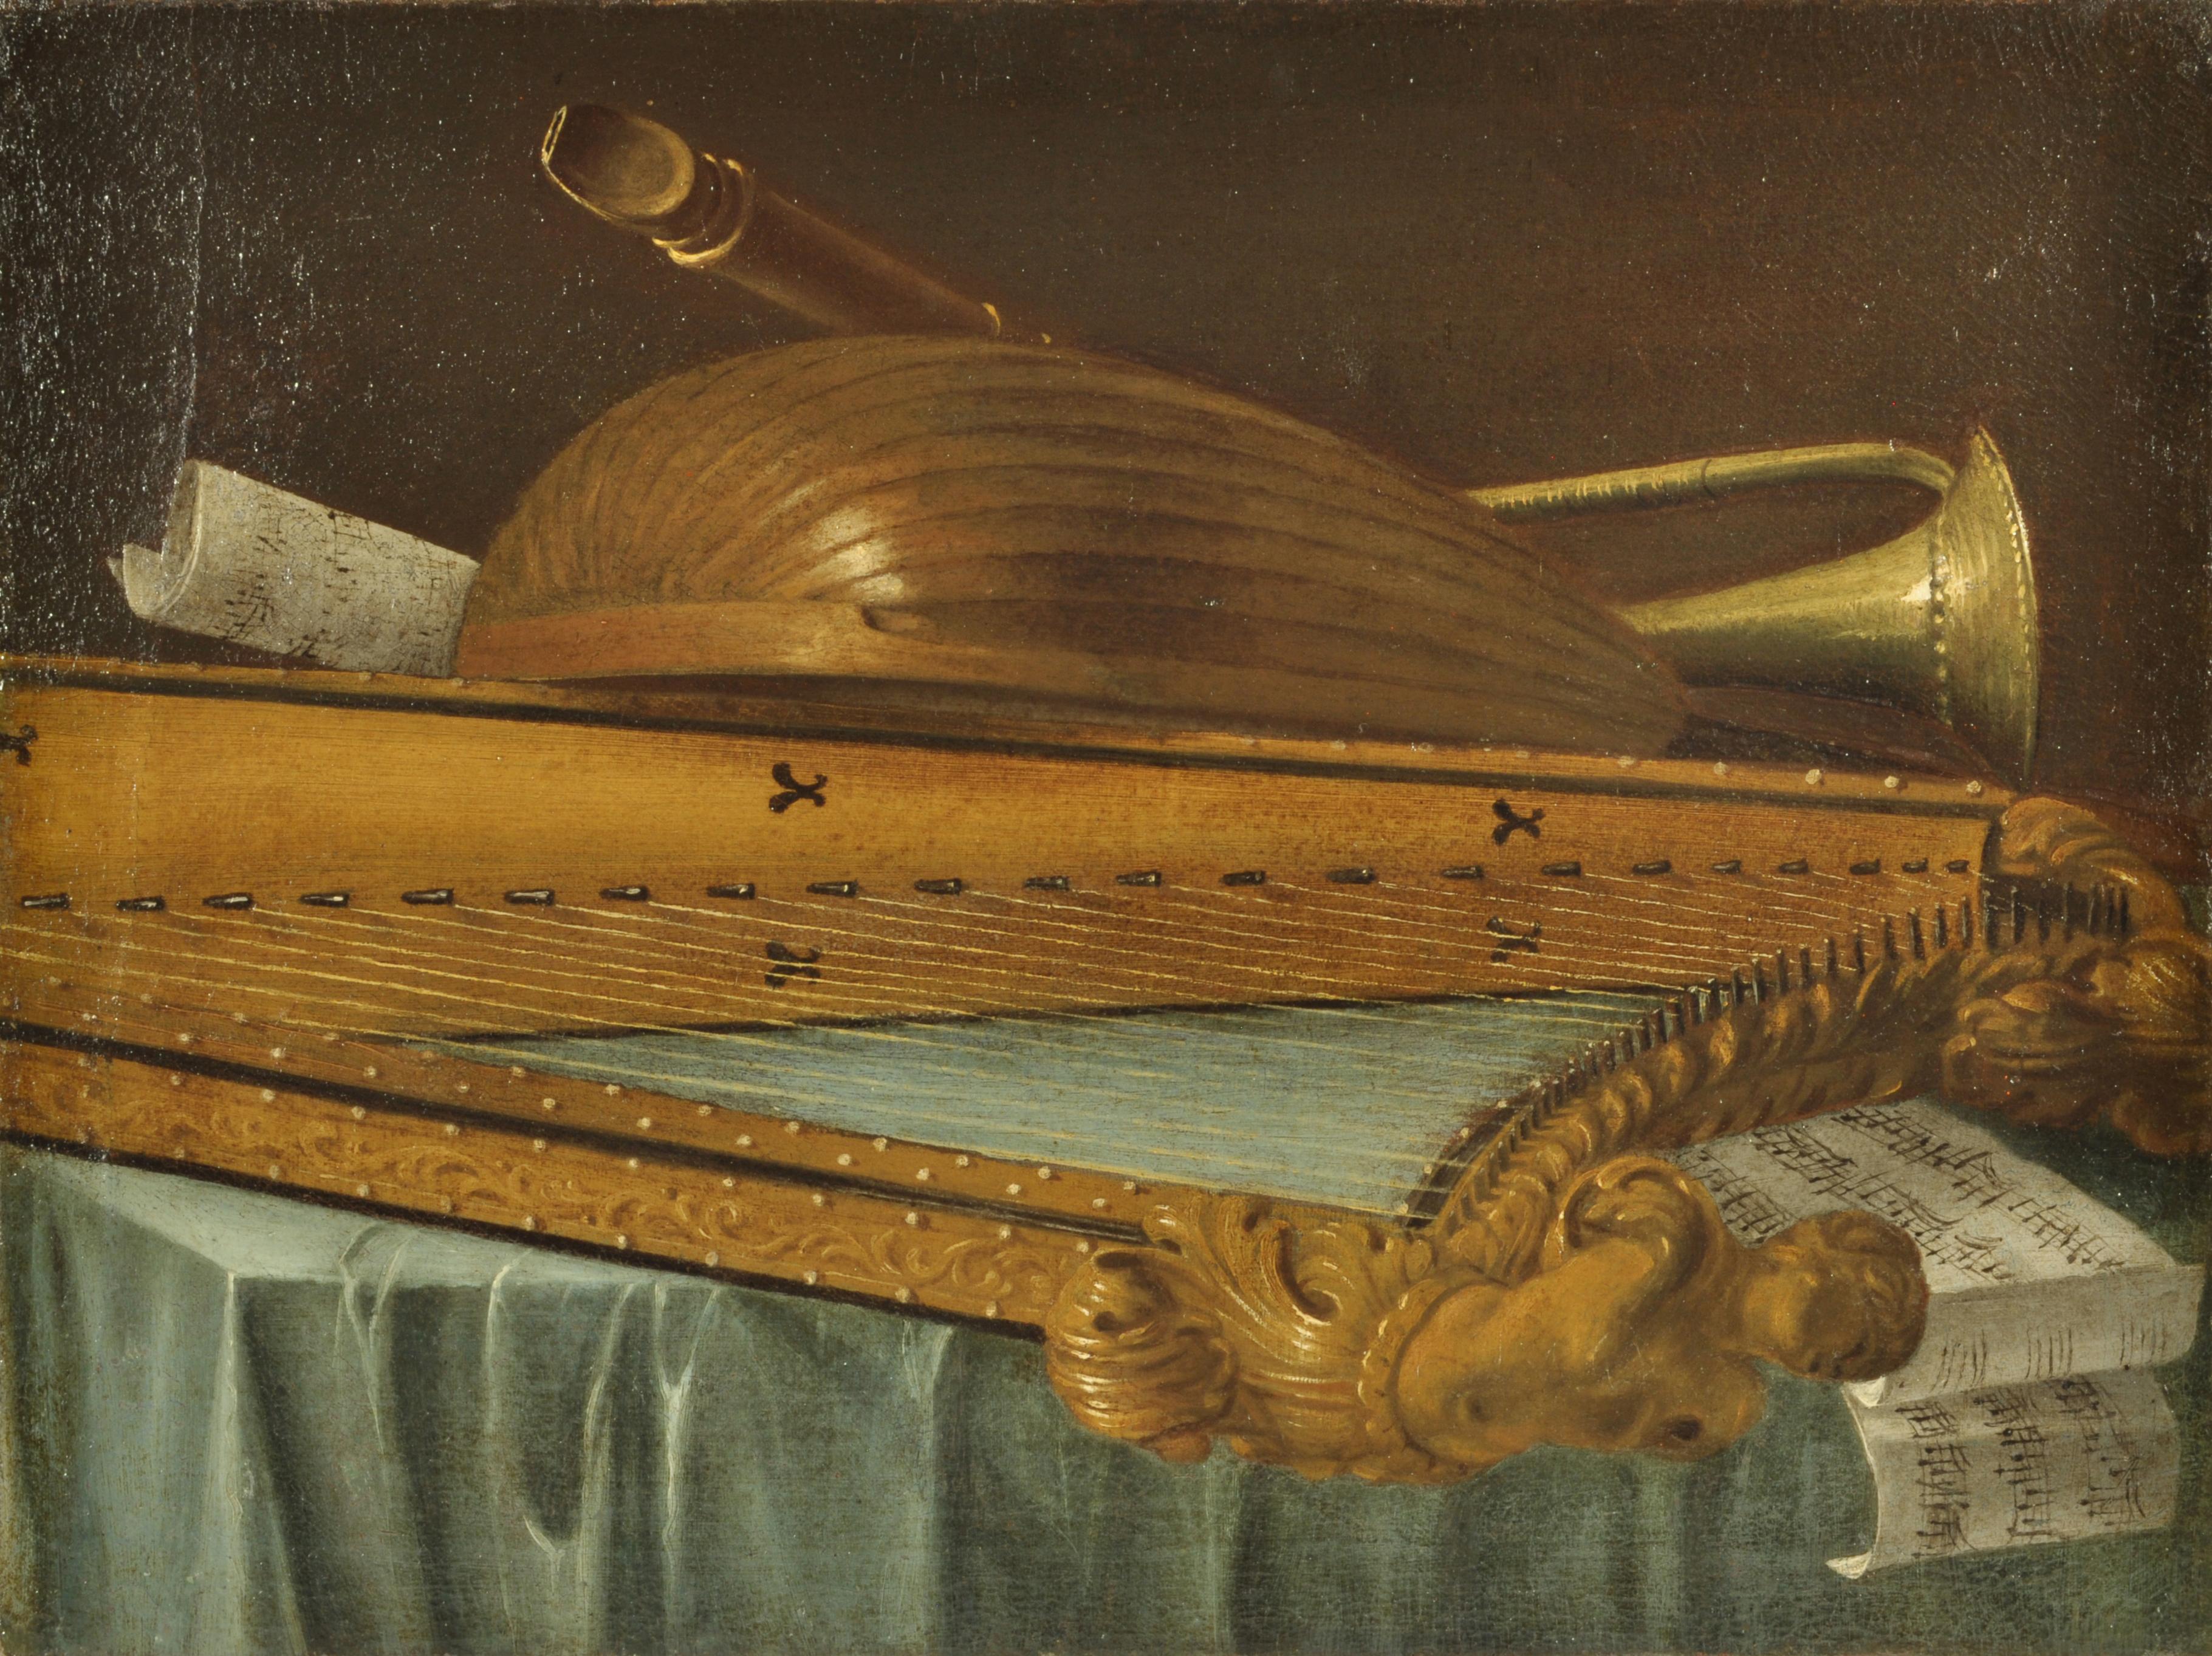 Cristoforo Munari (Reggio Emilia, 1667 - Piva, 1720)
and workshop

“Cello, two lutes, small apples and sheet music”, 52x69 cm
“Guitar, mandola, jug, peaches and score”, 51x68 cm
“Still life with harp, lute, trumpet, flute and score”, 52x69